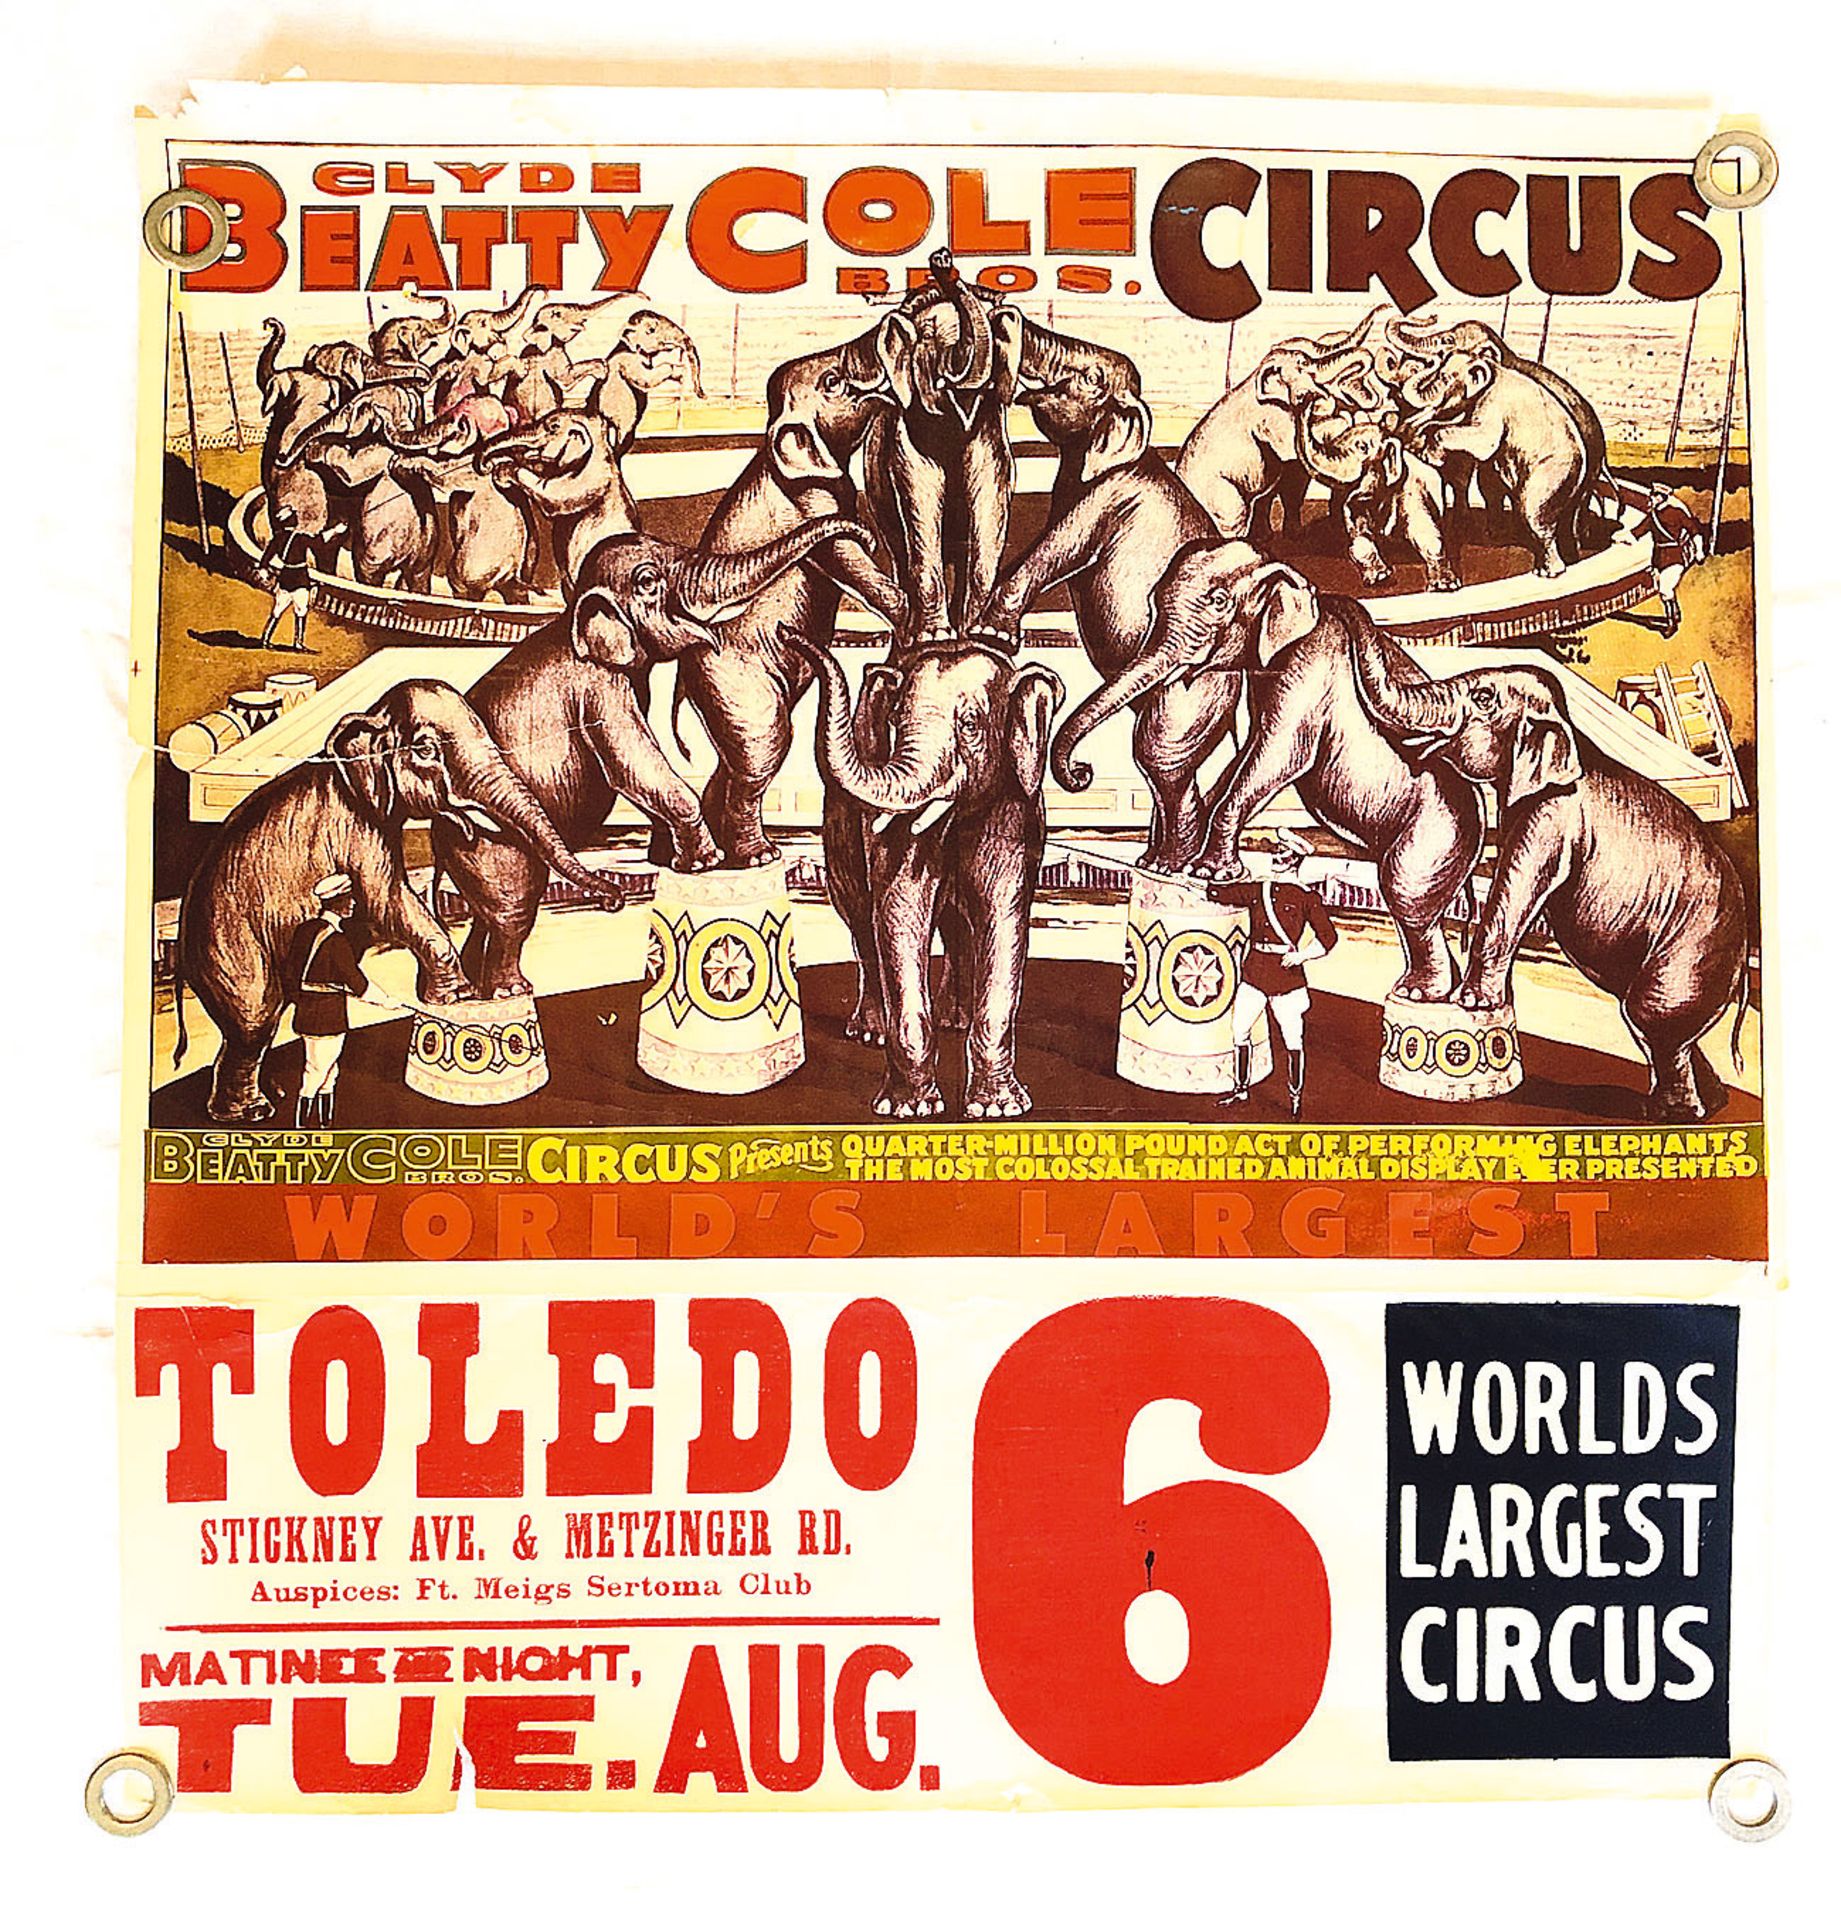 1940 Clyde Beatty Cole Bros Circus Poster  